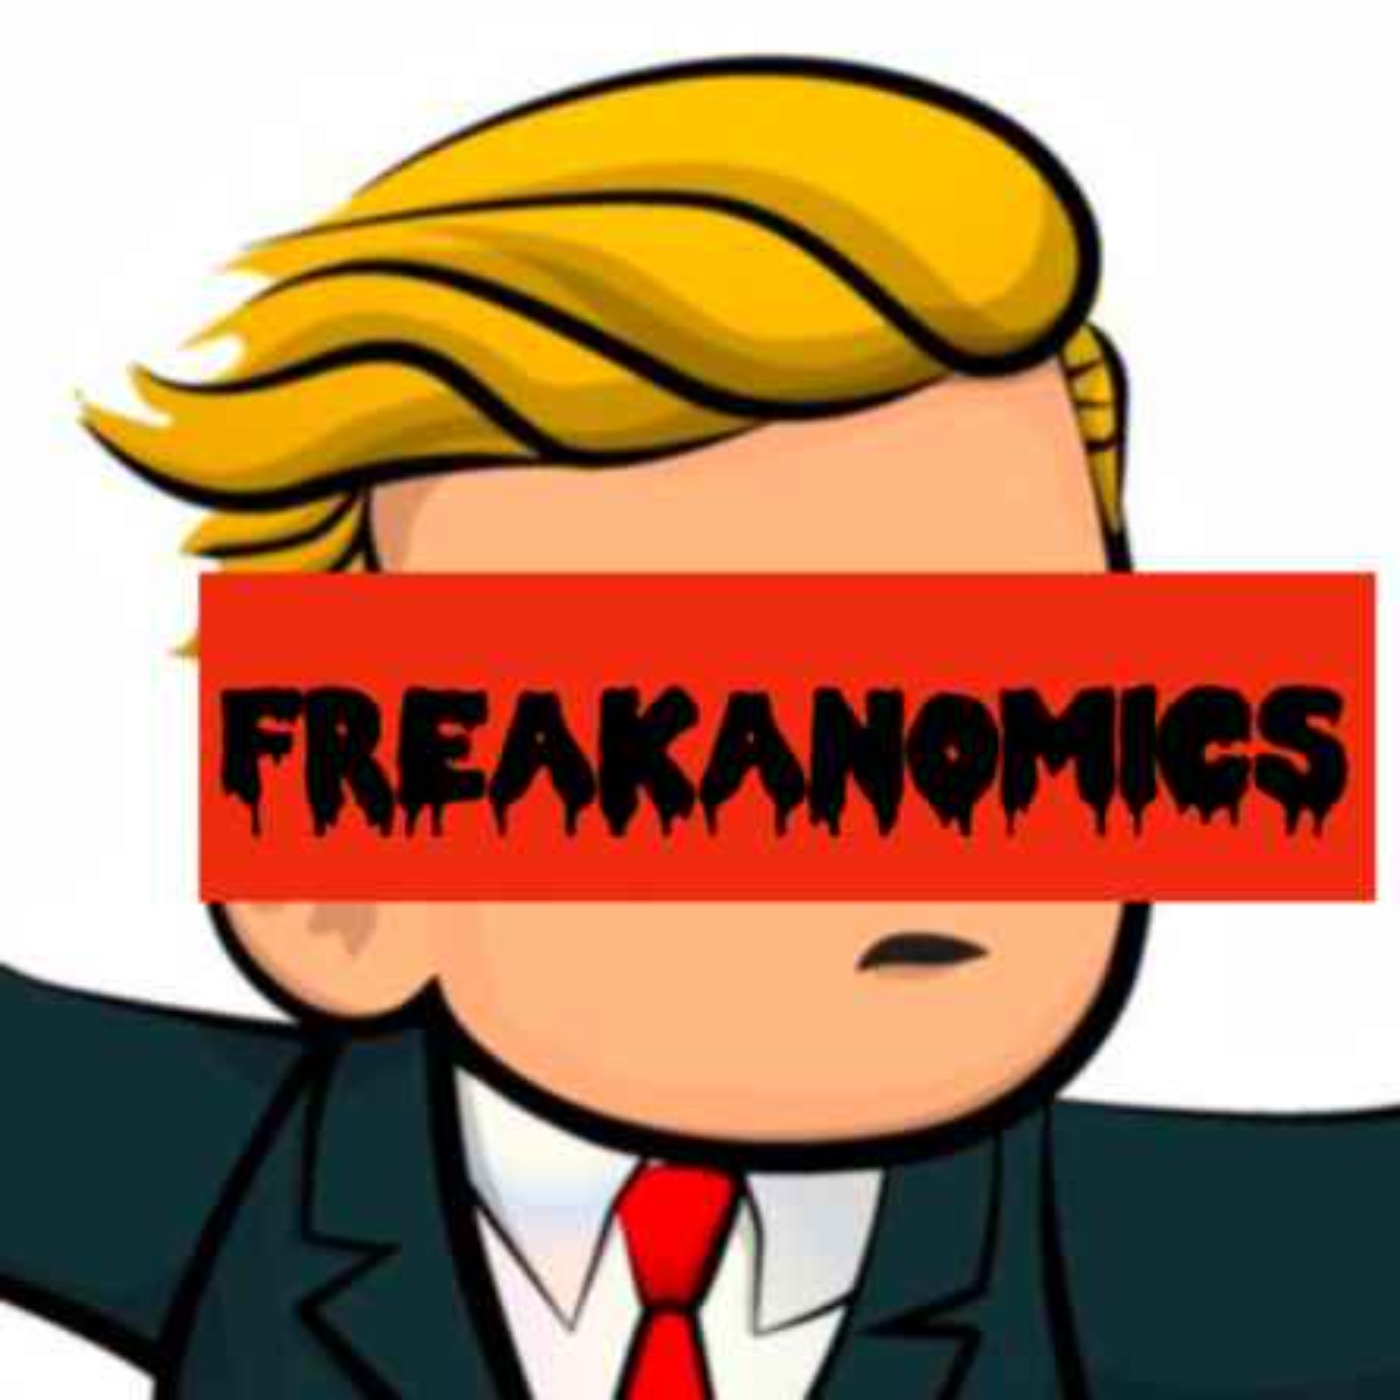 Episode 134: Freakanomics